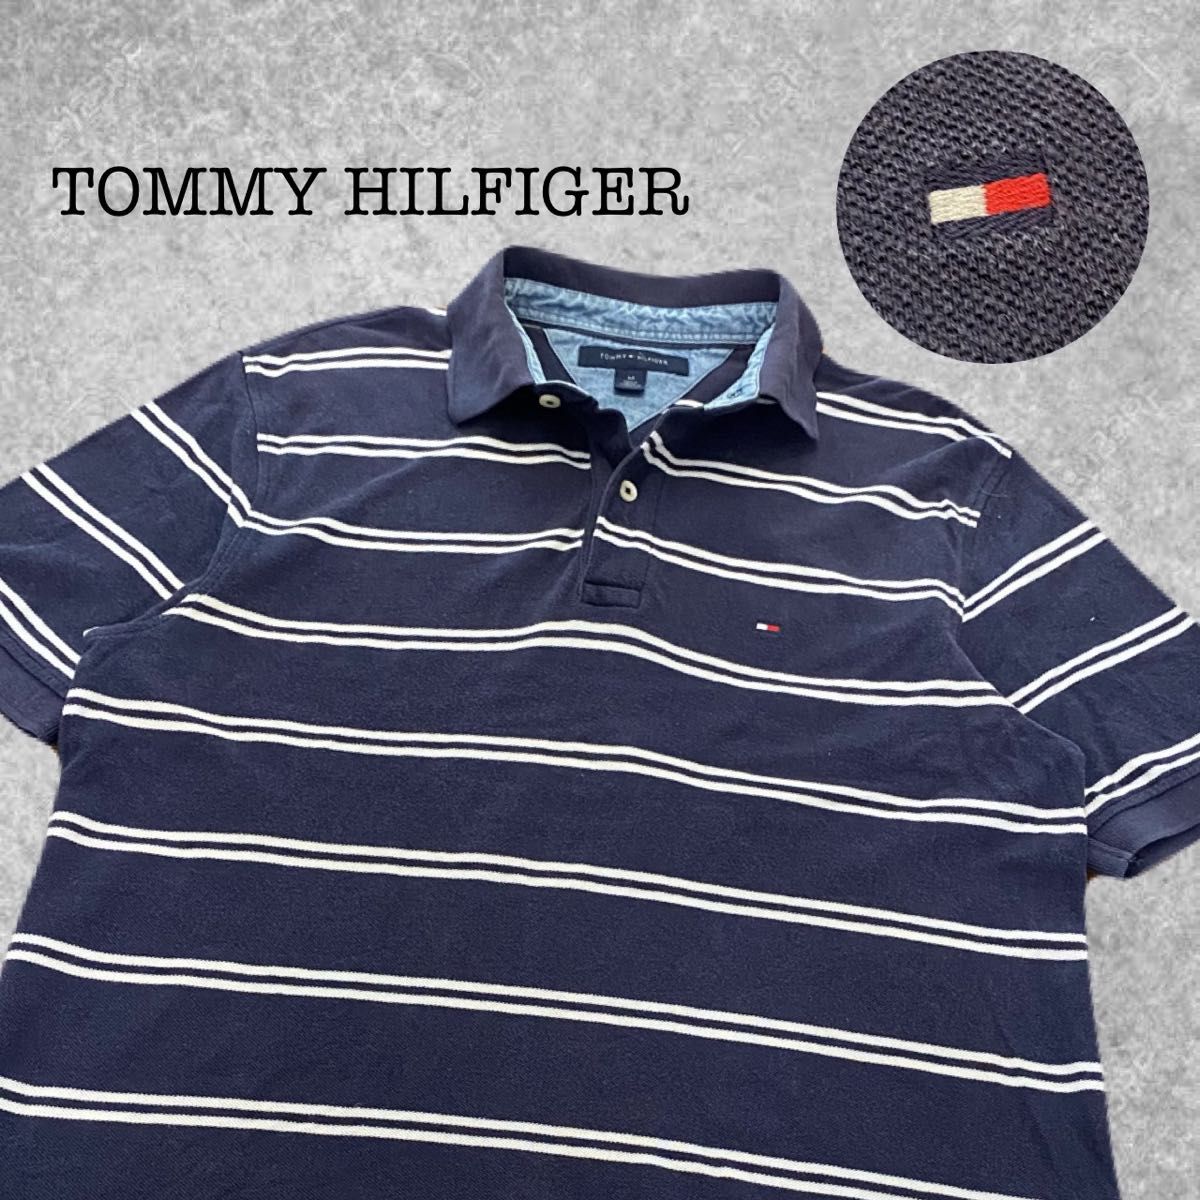 A-306★TOMMY HILFIGER トミーヒルフィガー★ネイビー紺色 ボーダー ロゴ刺繍 半袖 鹿の子 ポロシャツ M